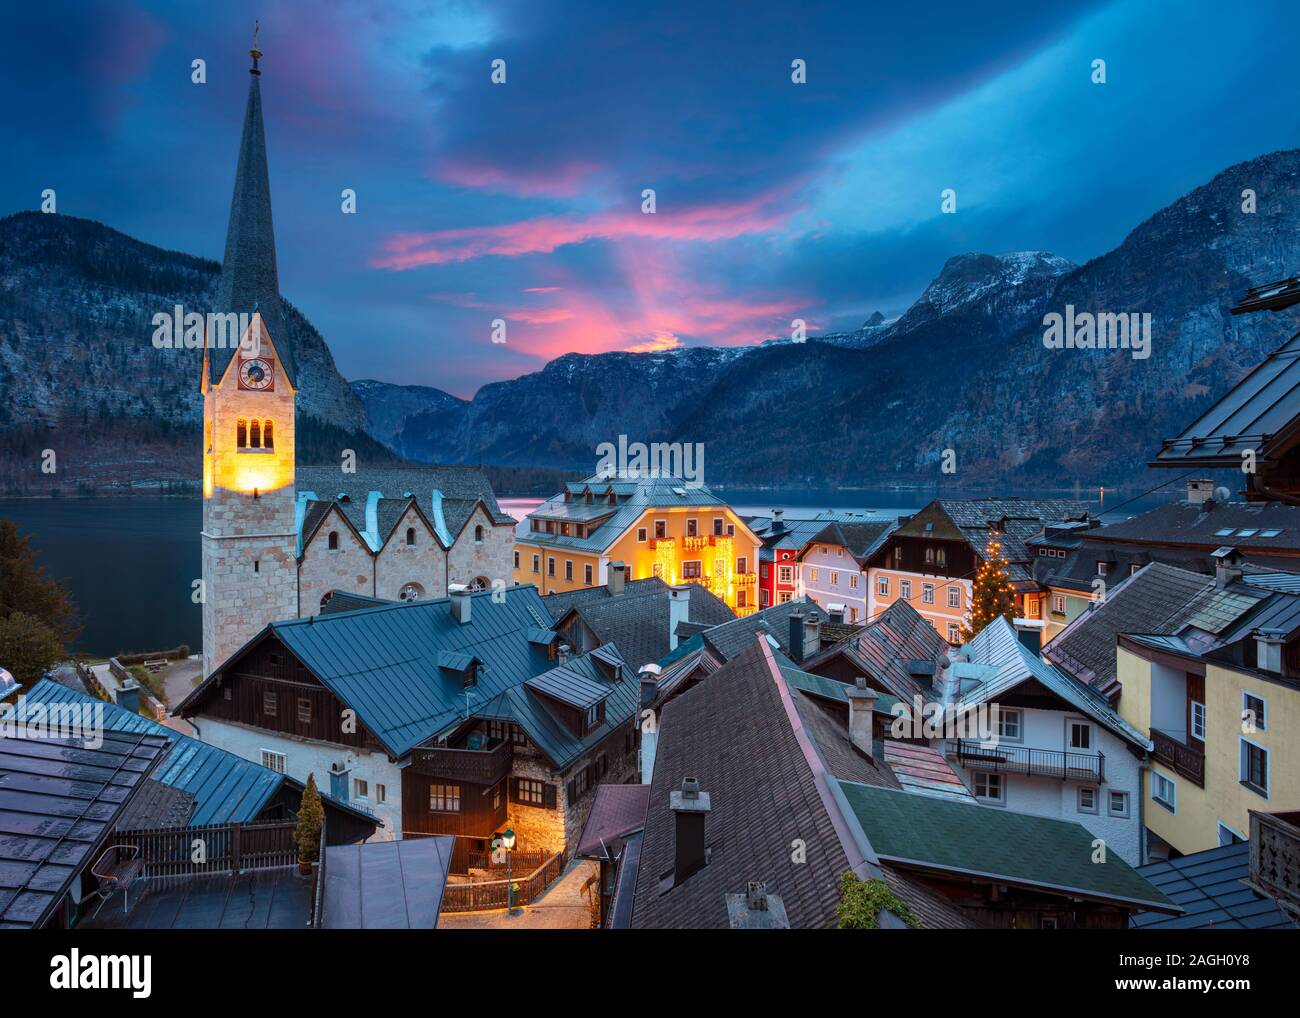 Hallstatt, Austria. Cityscape image of the famous alpine village Hallstatt, Austria during twilight blue hour. Stock Photo